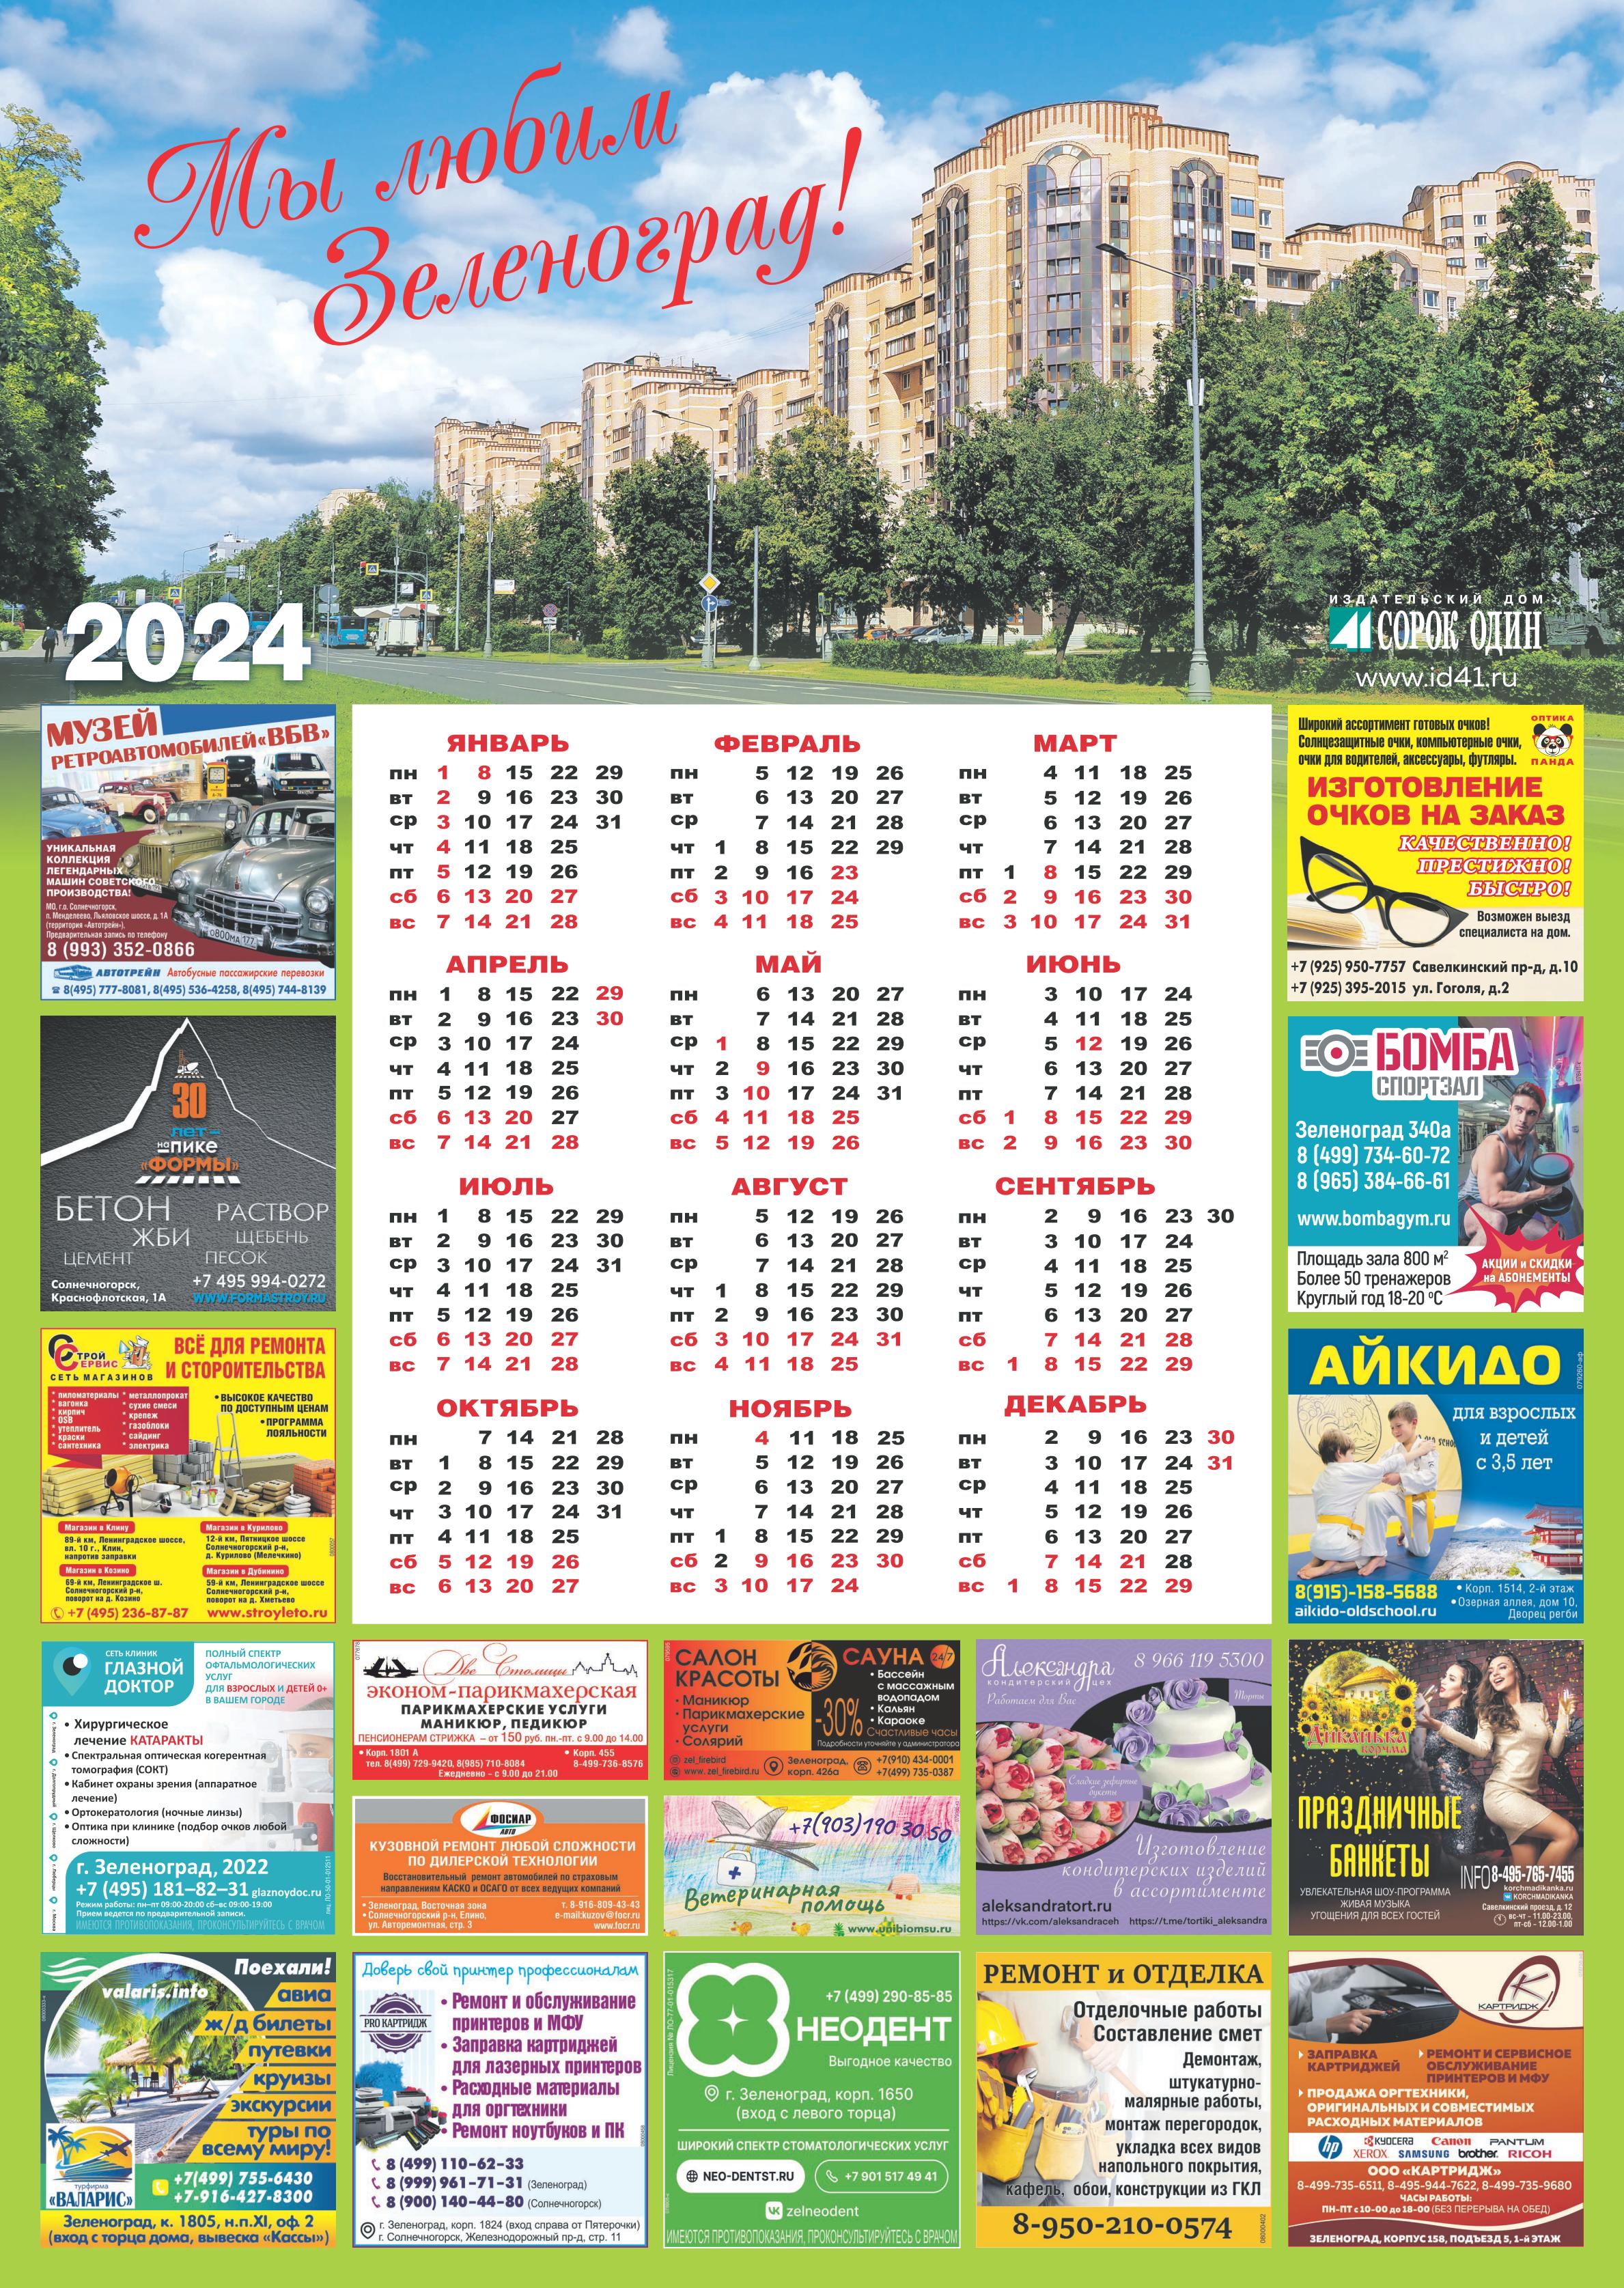 Календарь «Мы любим Зеленоград!» А1 2024